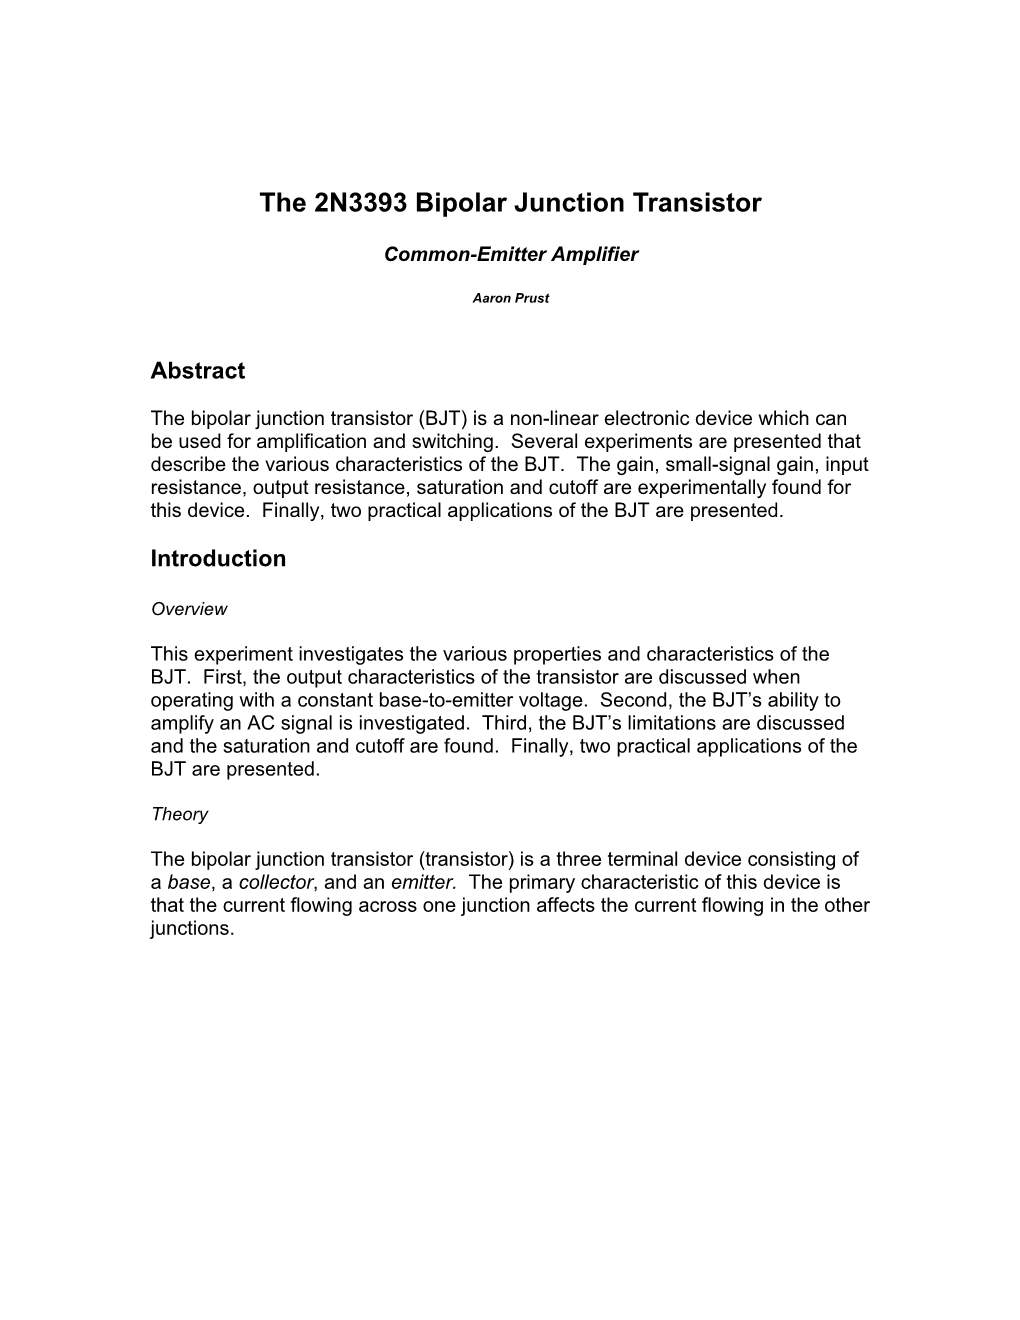 The 2N3393 Bipolar Junction Transistor